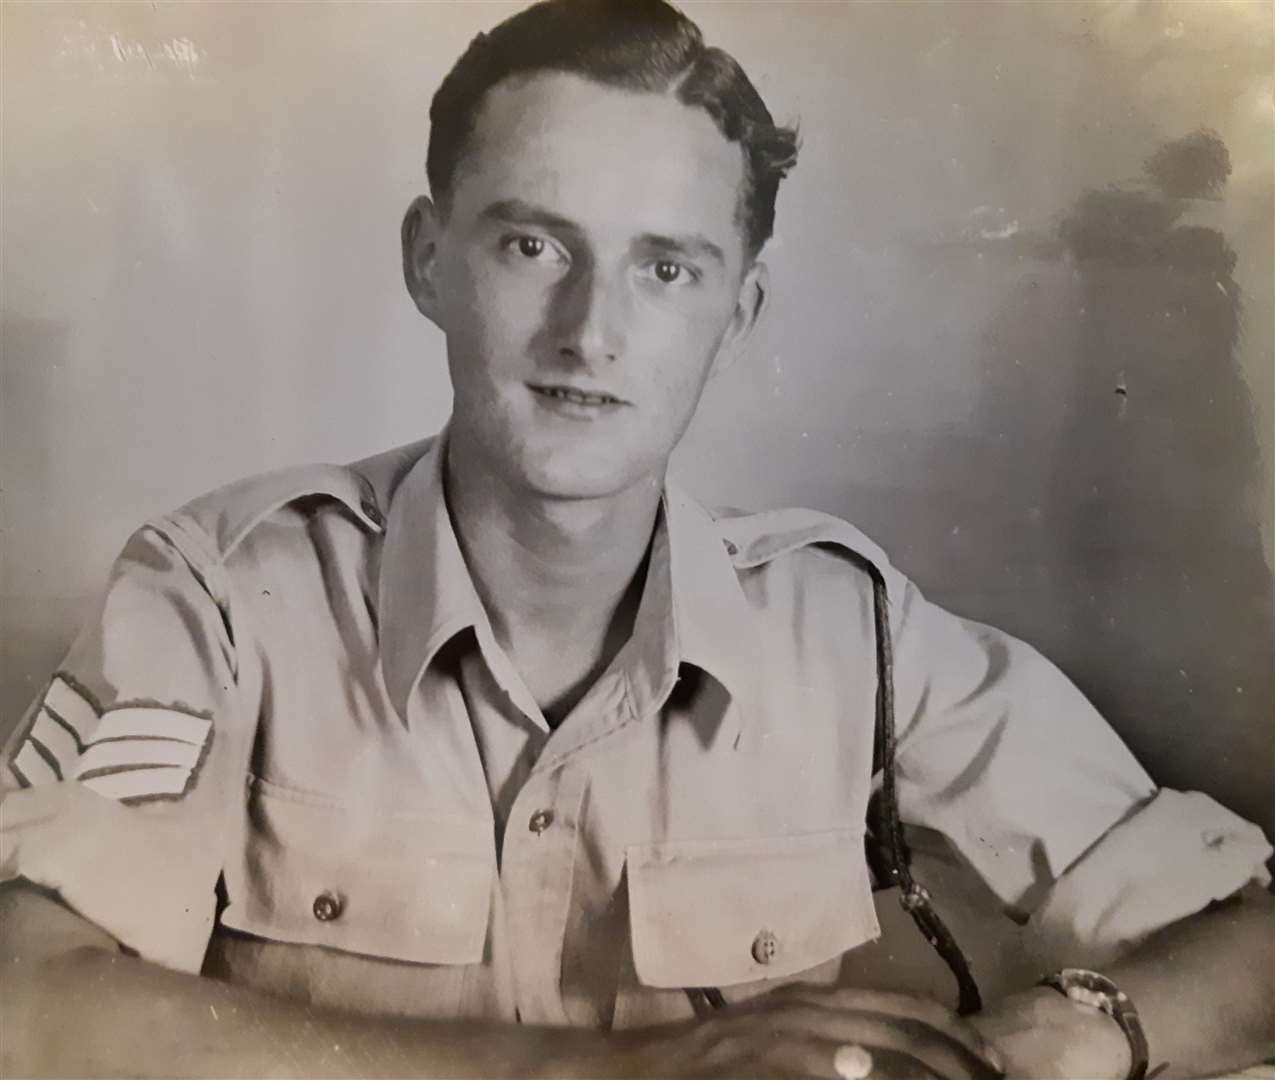 John Stokes in his army uniform